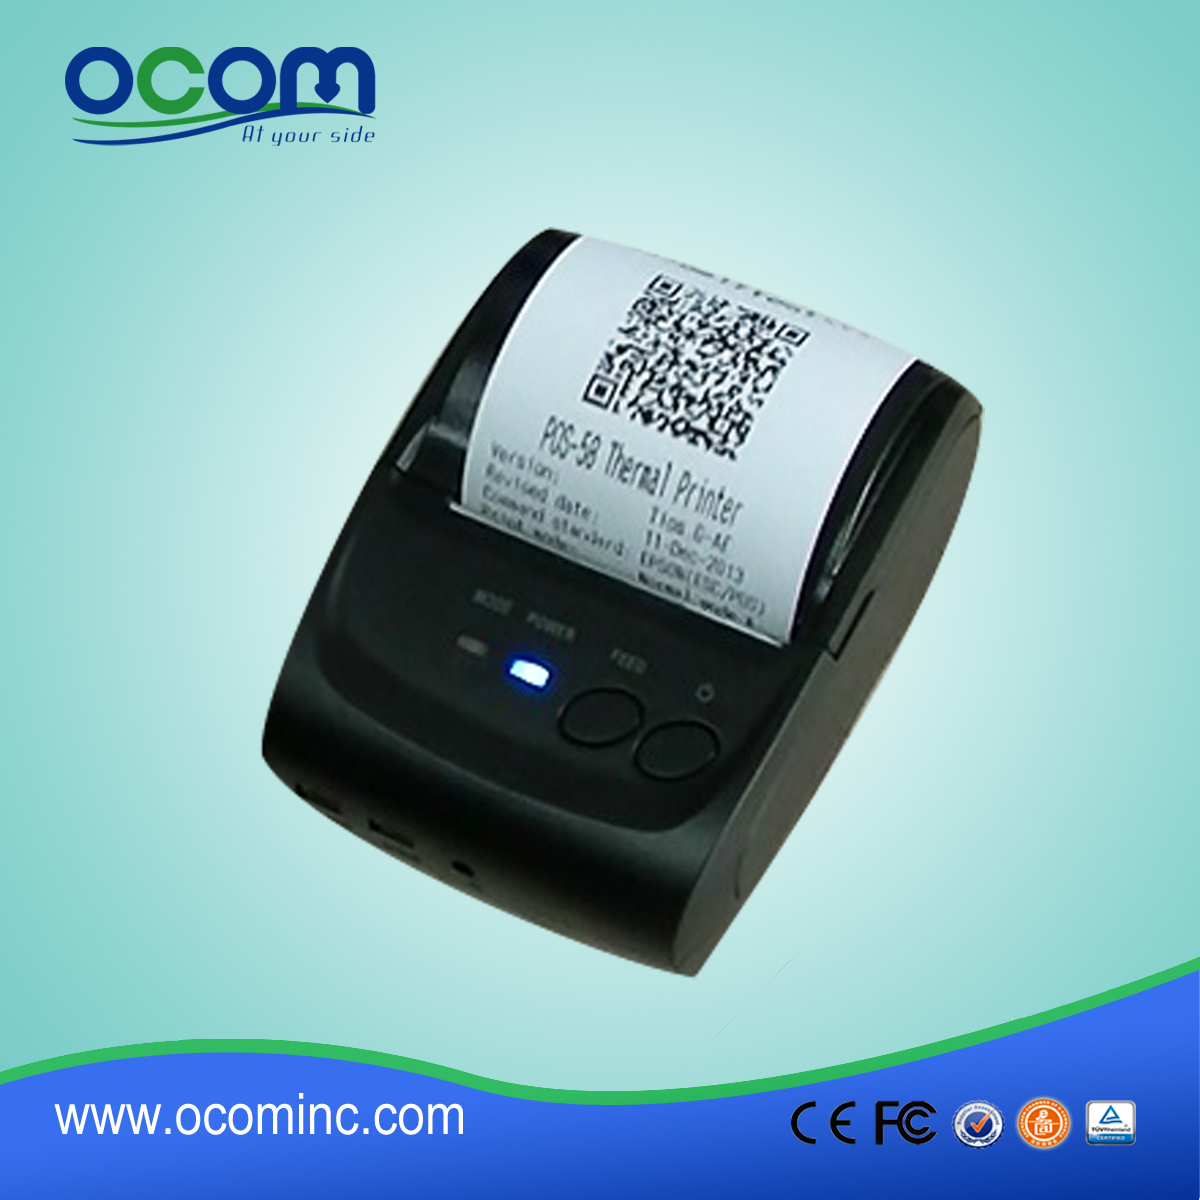 Bluetooth принтер для системы Такси OCPP-M05